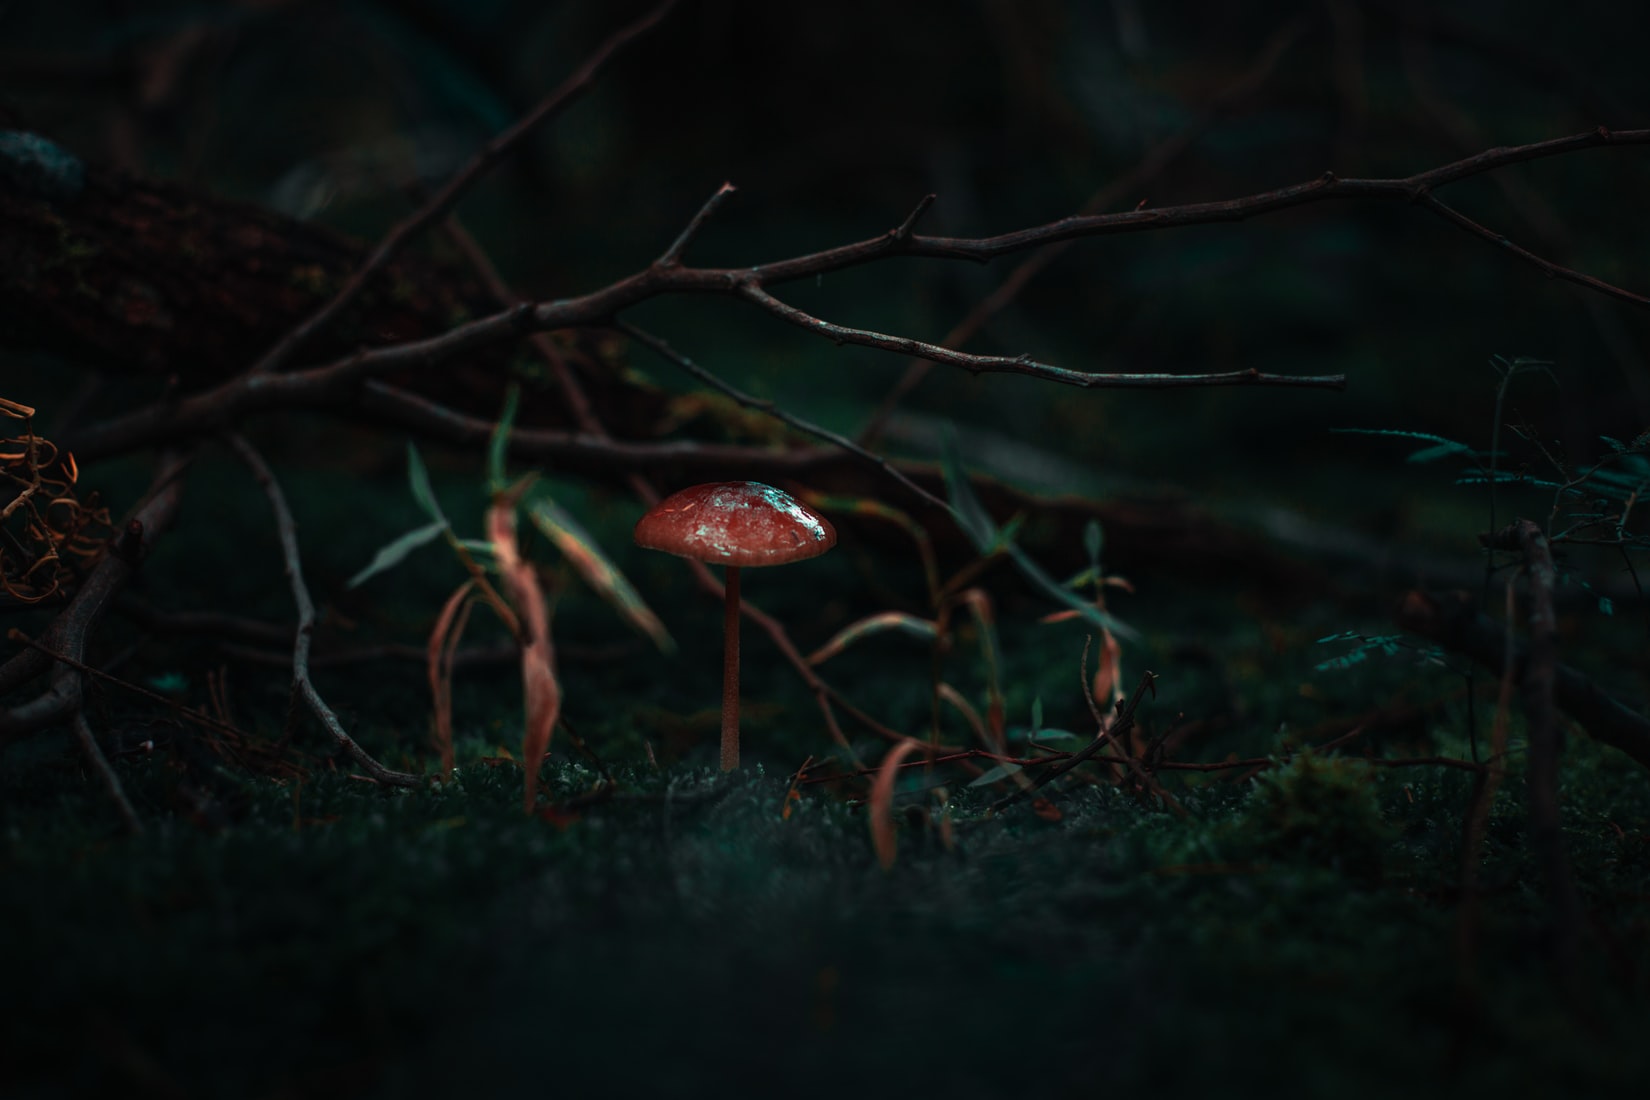 Psilocybin magic mushroom growing in nature